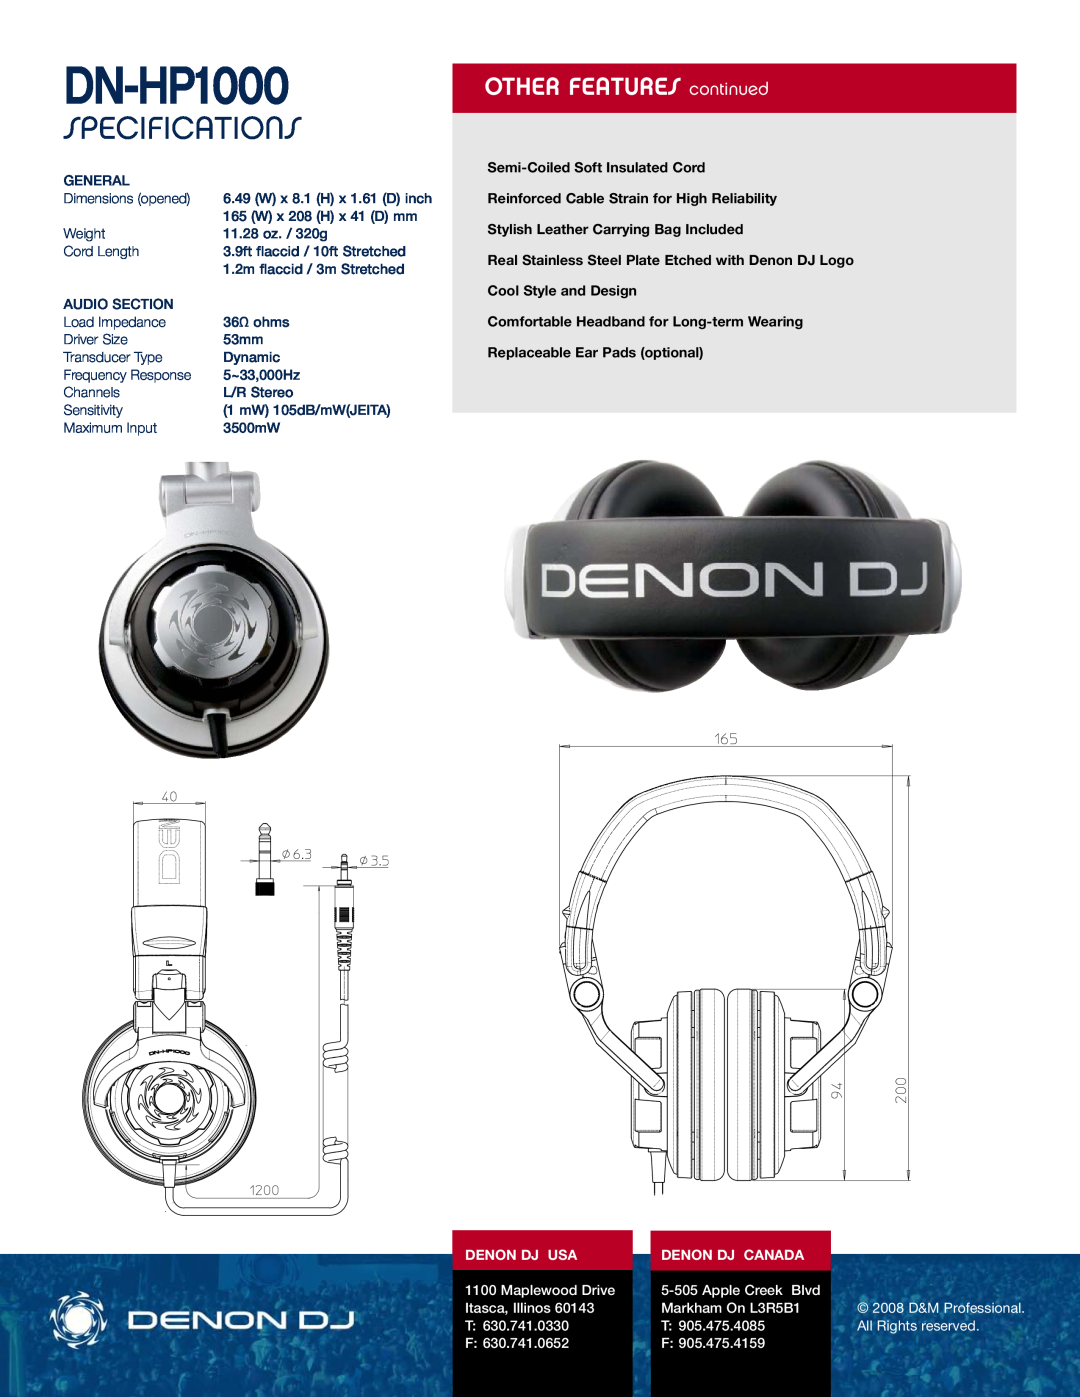 Denon DJ DN-HP1000 manual Specifications, OTHER FEATURES continued, Denon Dj Usa, Denon Dj Canada 